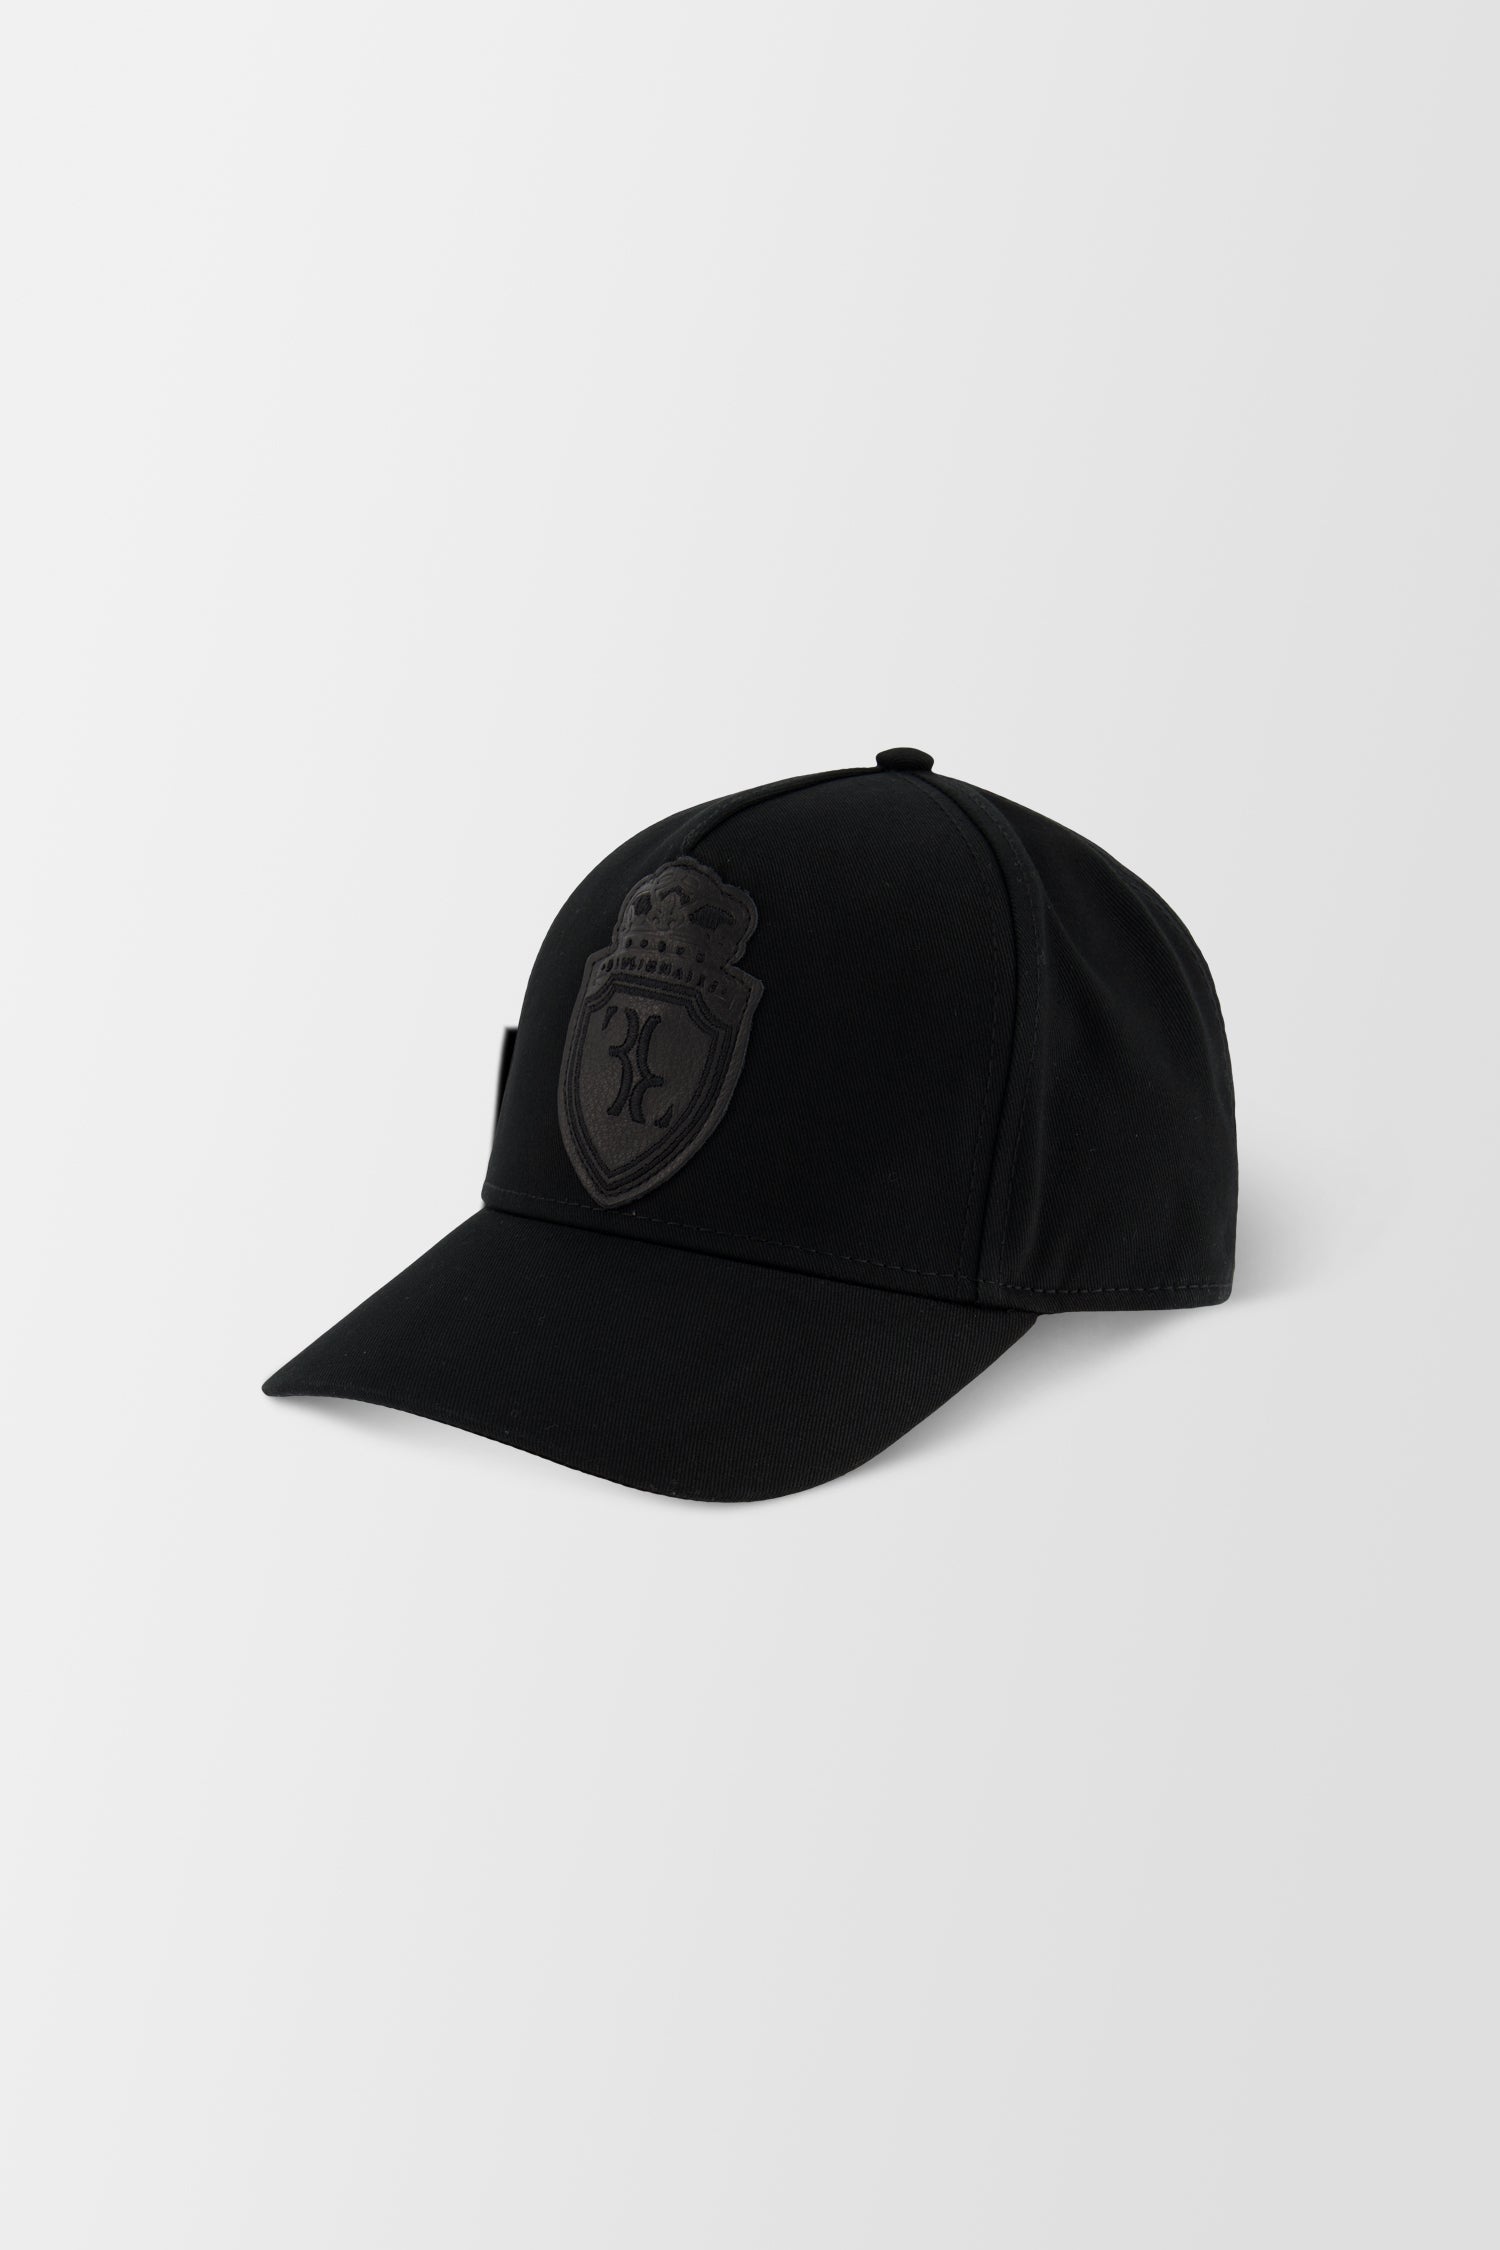 Billionaire Black/Nickel Soft Visor Crest Cap